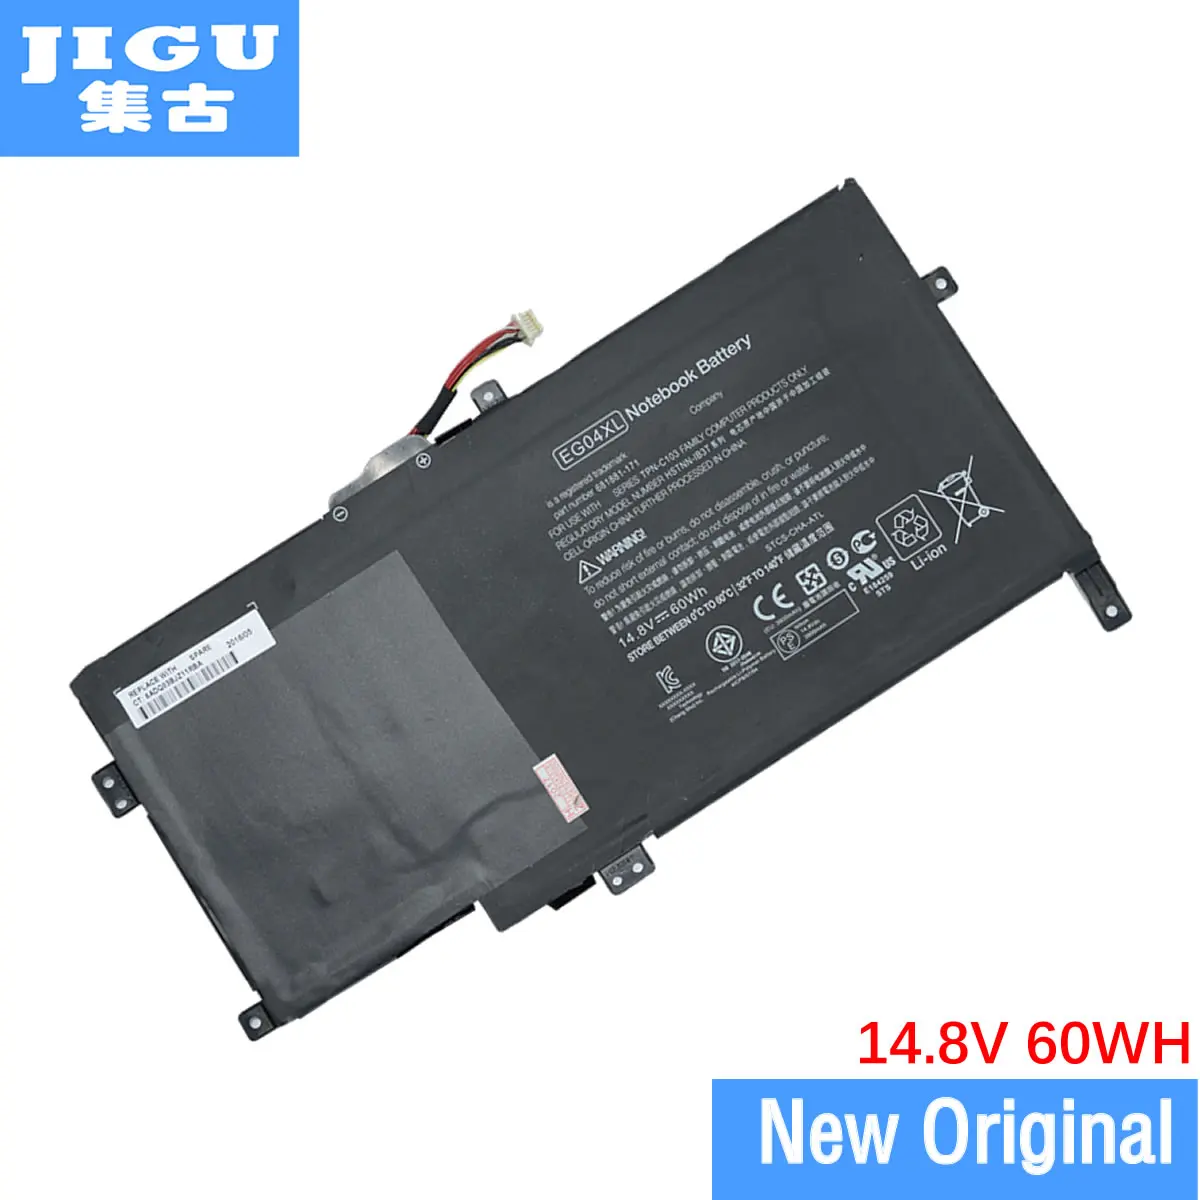 

JIGU ORIGNAL Laptop Battery 681881-171 681881-271 681951-001 EG04 EG04XL EGO4XL For HP FOR Envy 6 Series